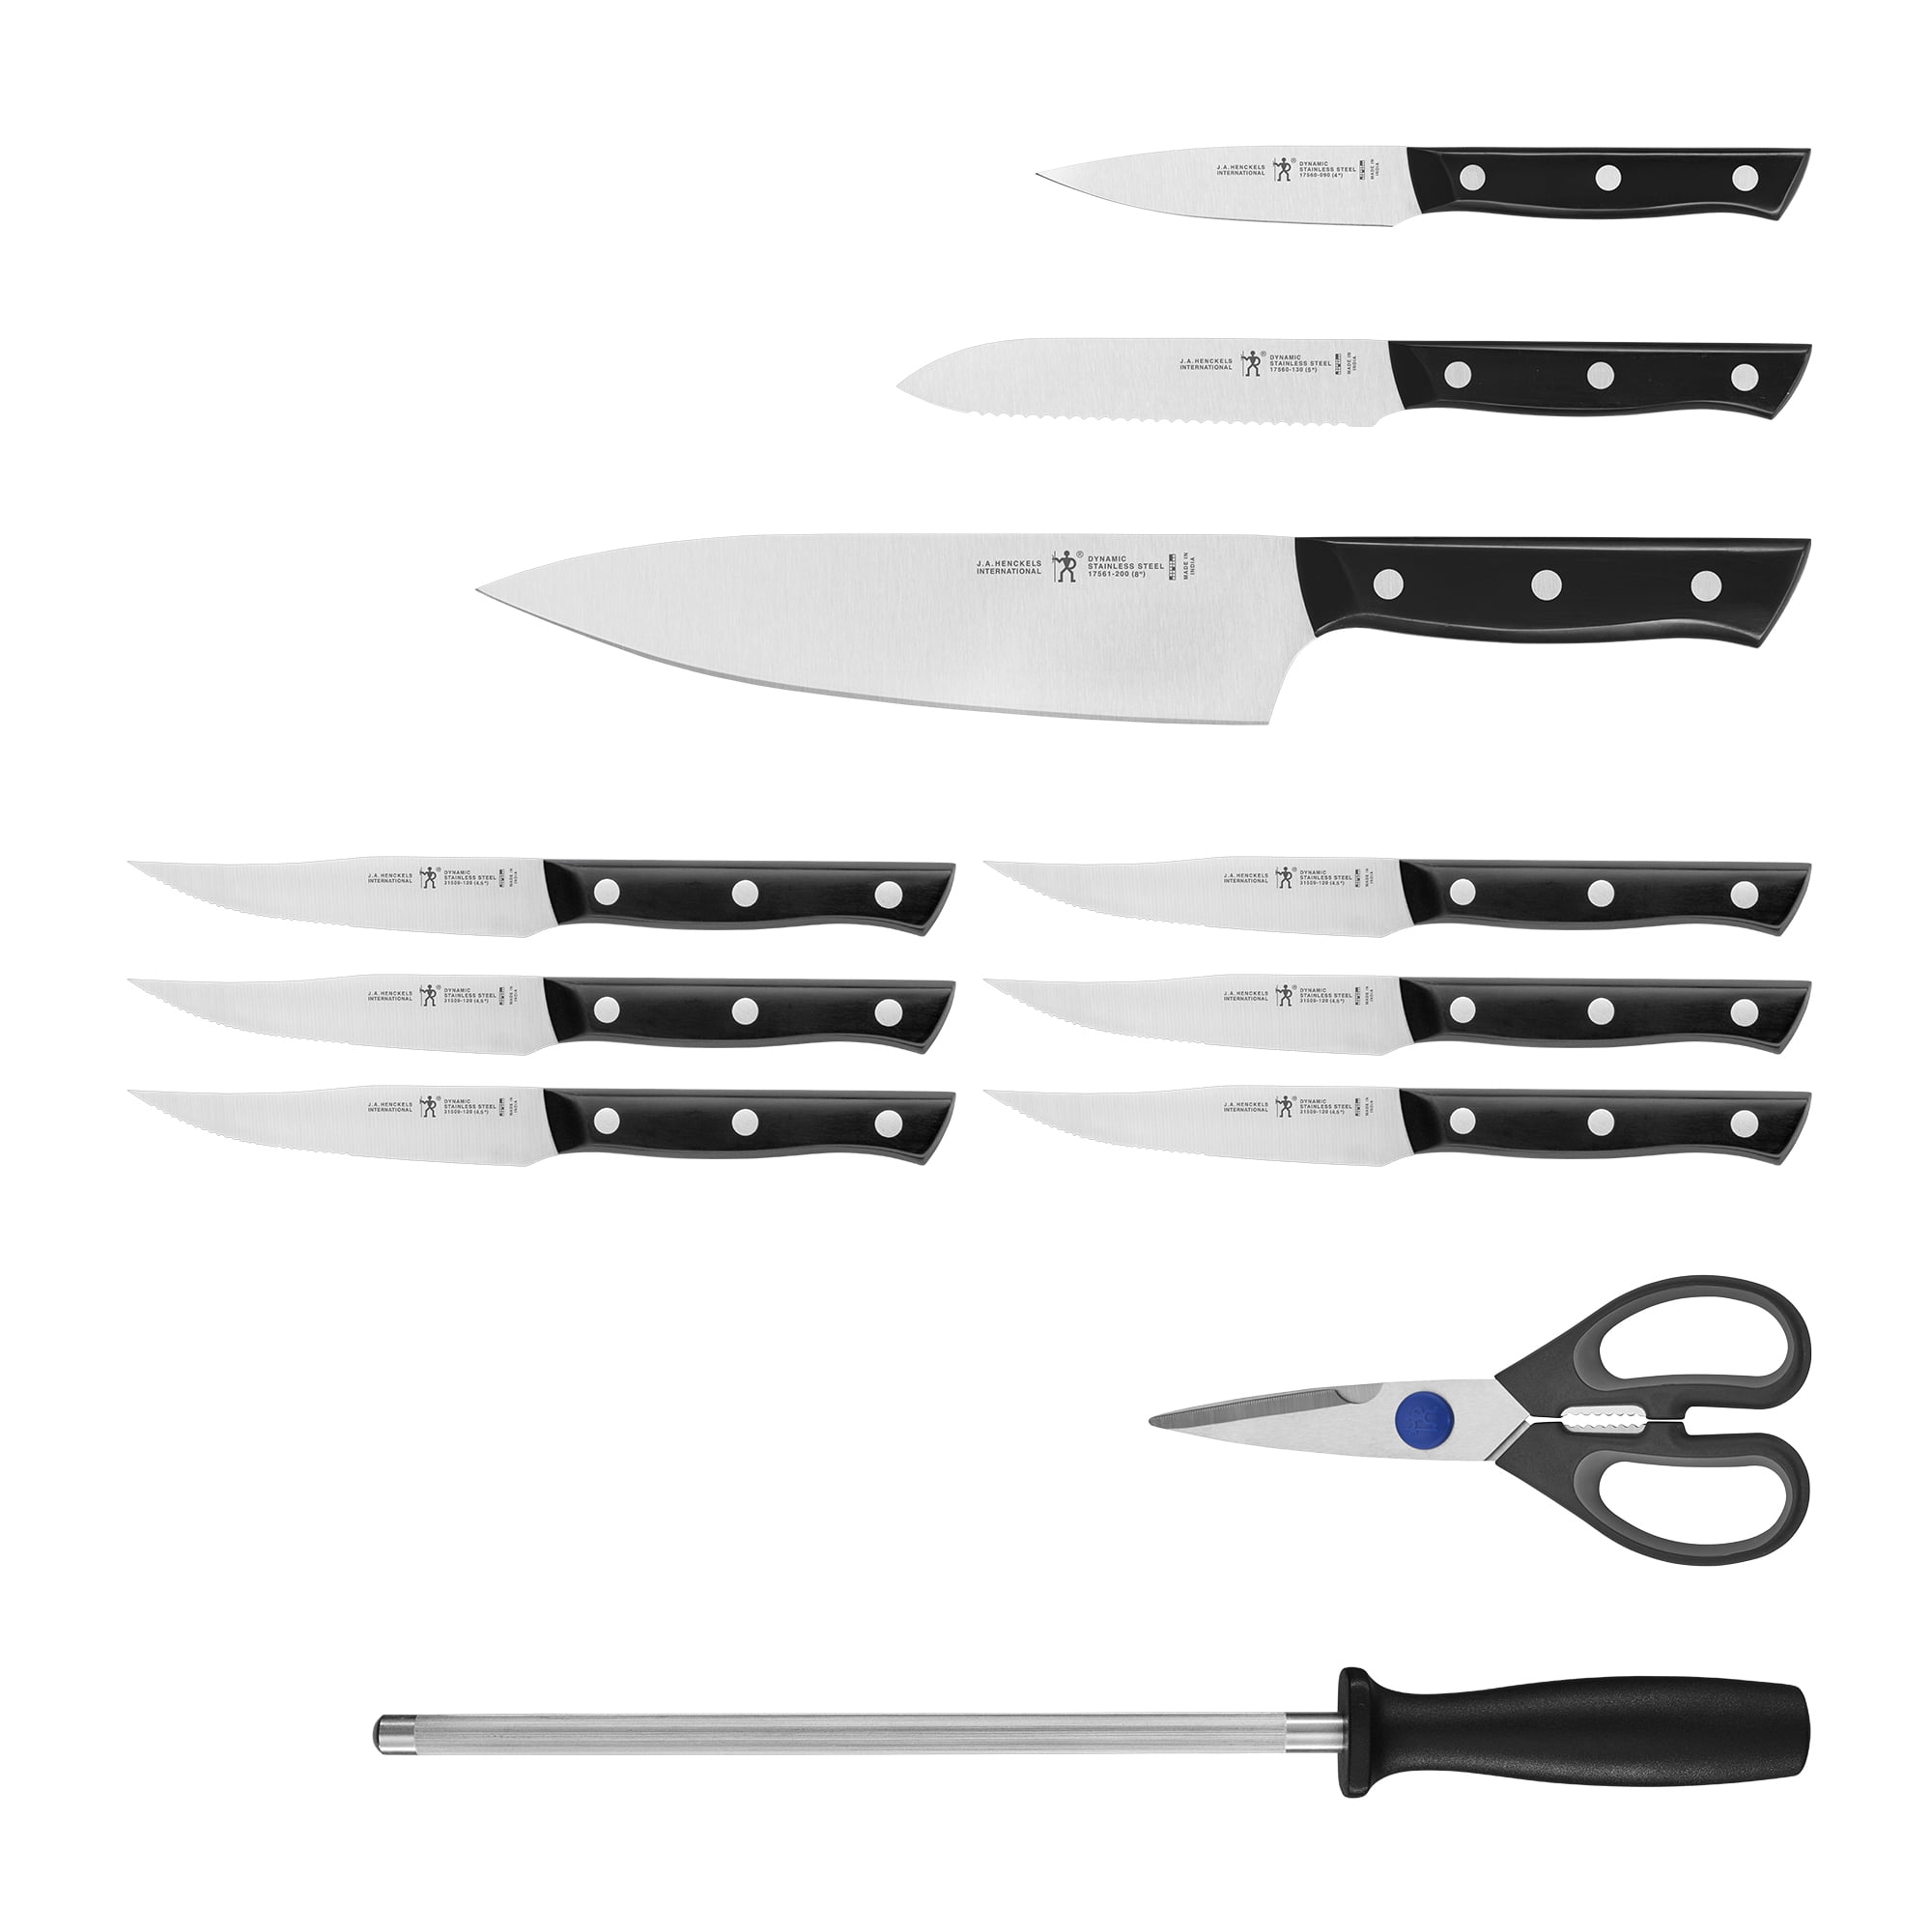 J.A. Henckels Dynamic Fine Edge Cutlery Wood Block 18-Pc. Kitchen Knives Set